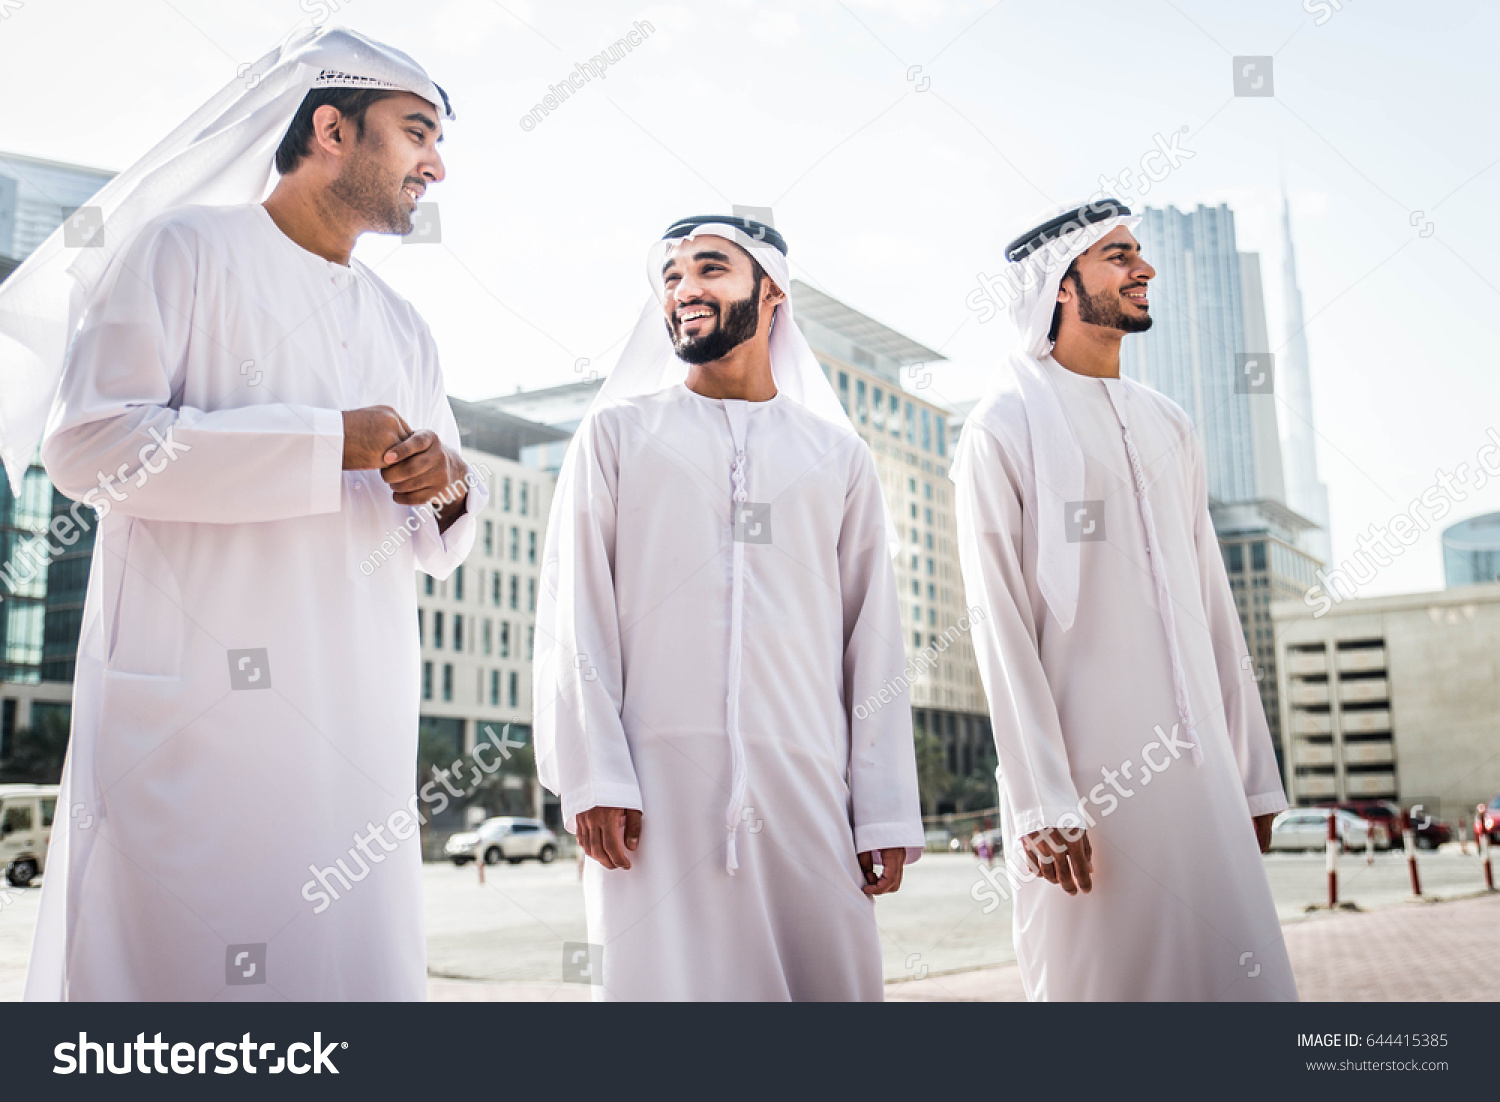 38,257 Dubai man Images, Stock Photos & Vectors | Shutterstock